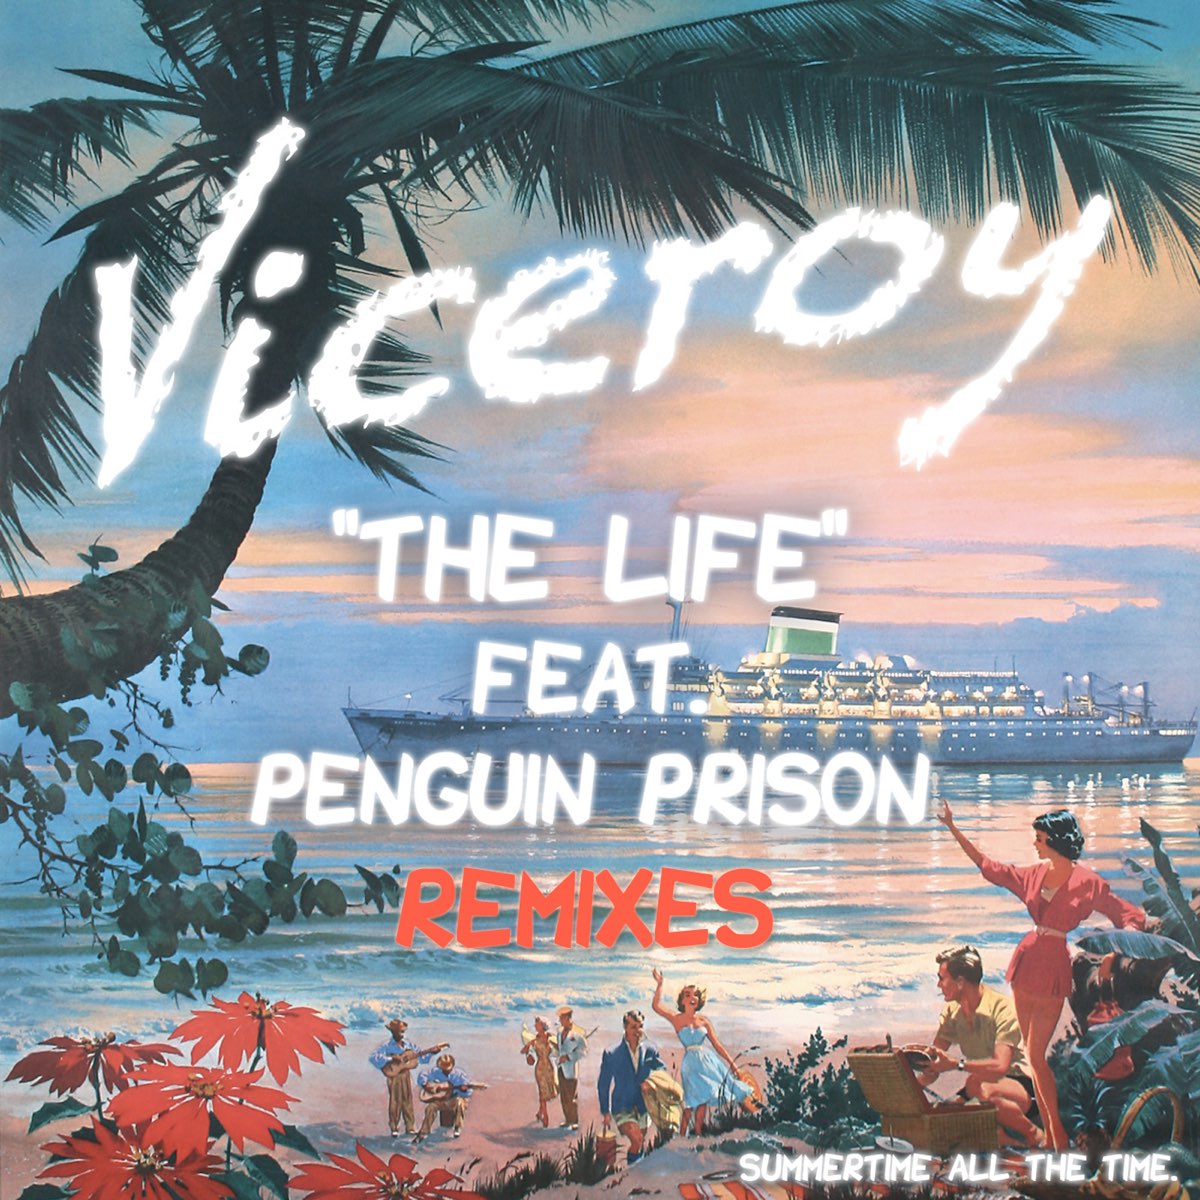 Disco inferno viceroy jet life remix